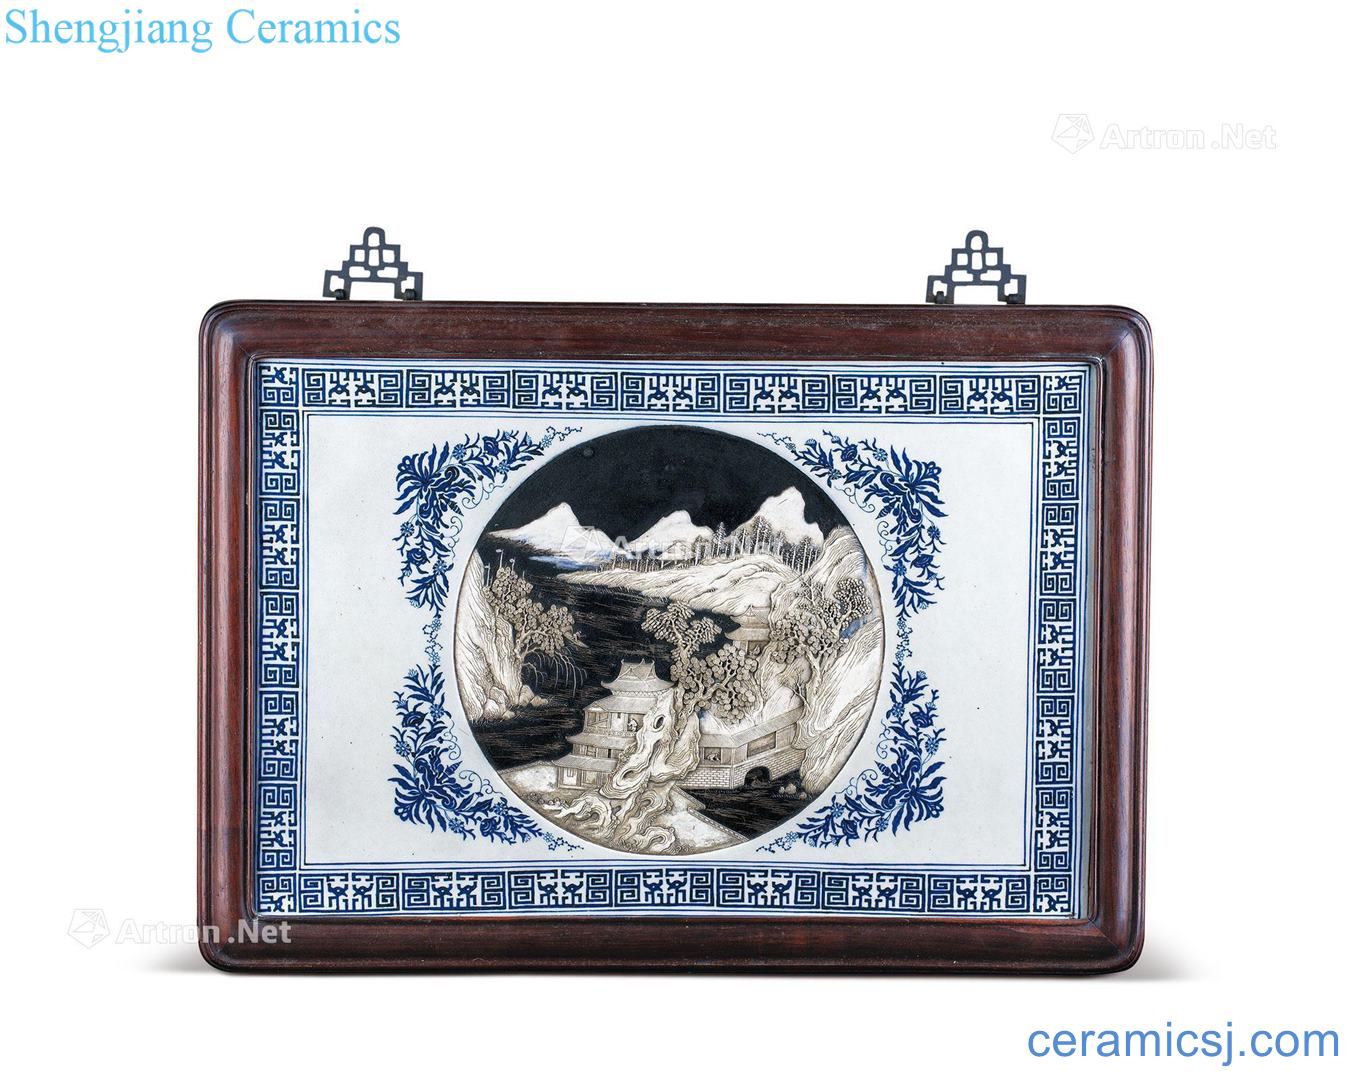 Qing porcelain medallion landscape character relief porcelain plate